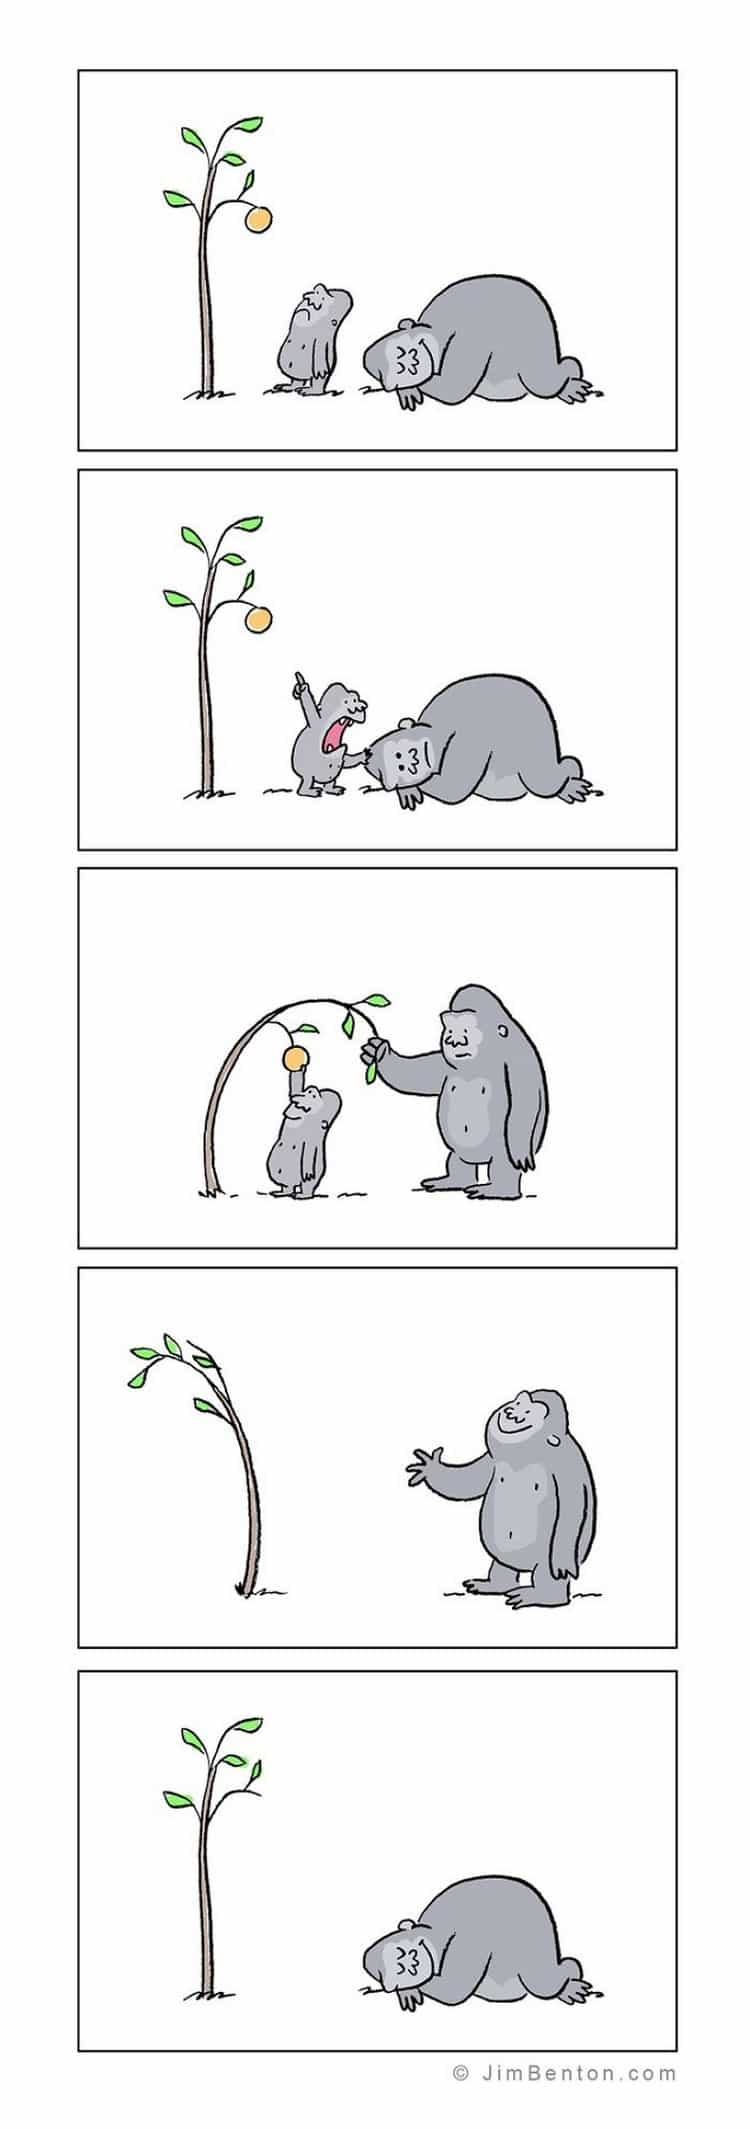 funny gorillas